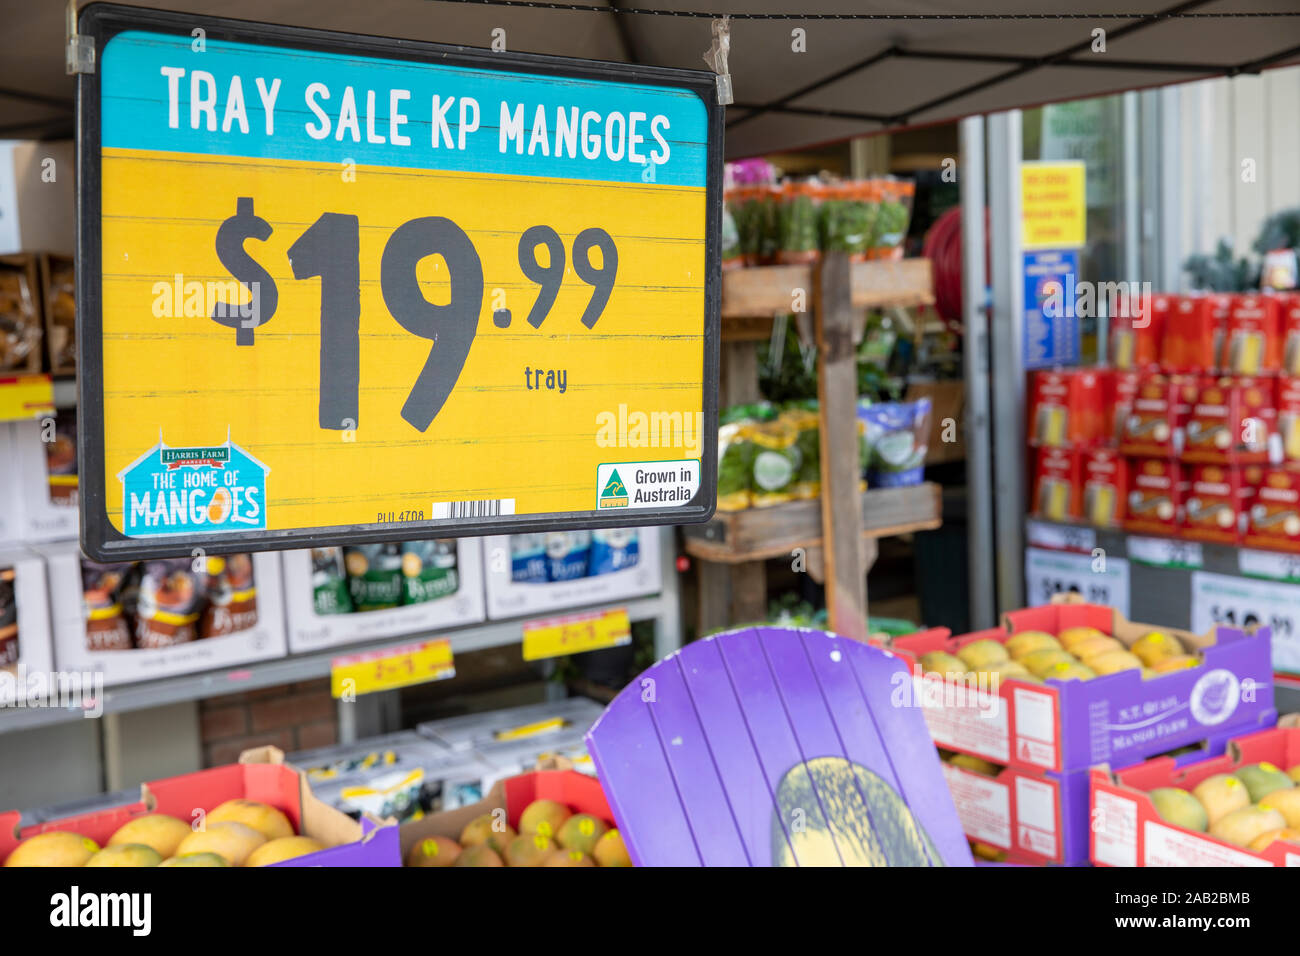 Harris Farm supermarket and trays of mangoes on sale in Sydney,NSW, Australia Stock Photo